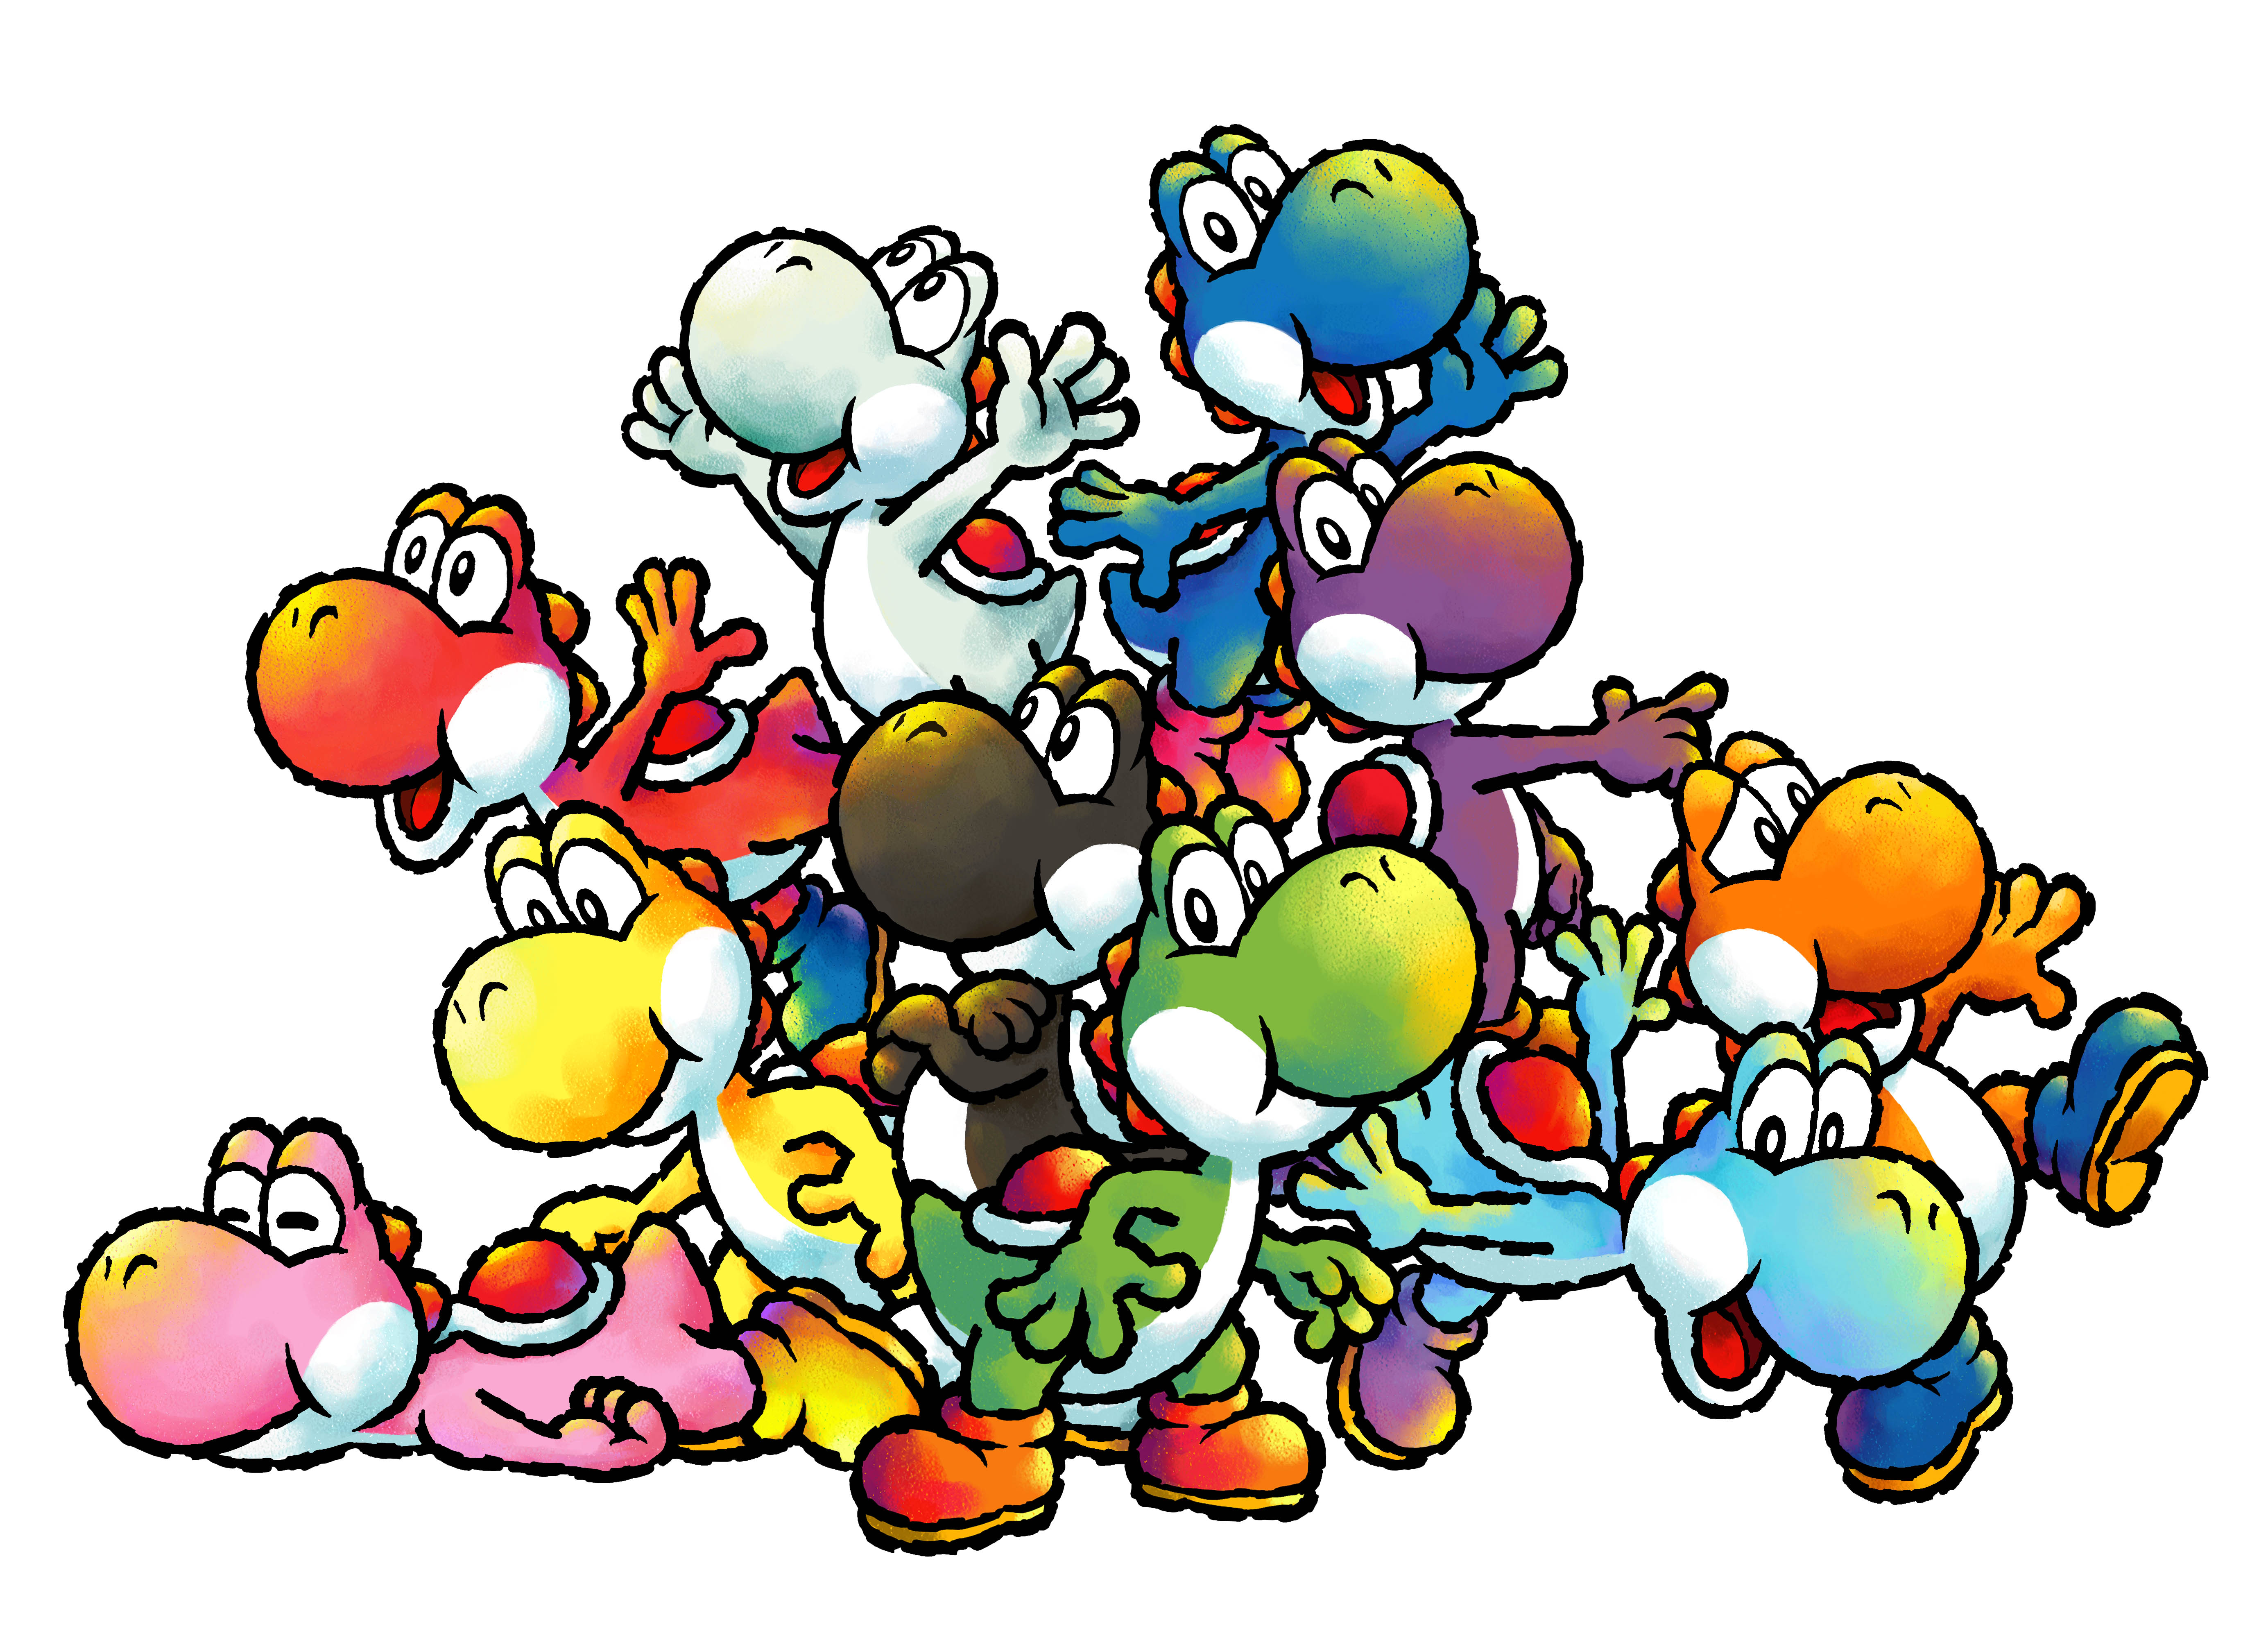 Green and white egg illustration, Mario & Yoshi Super Mario World